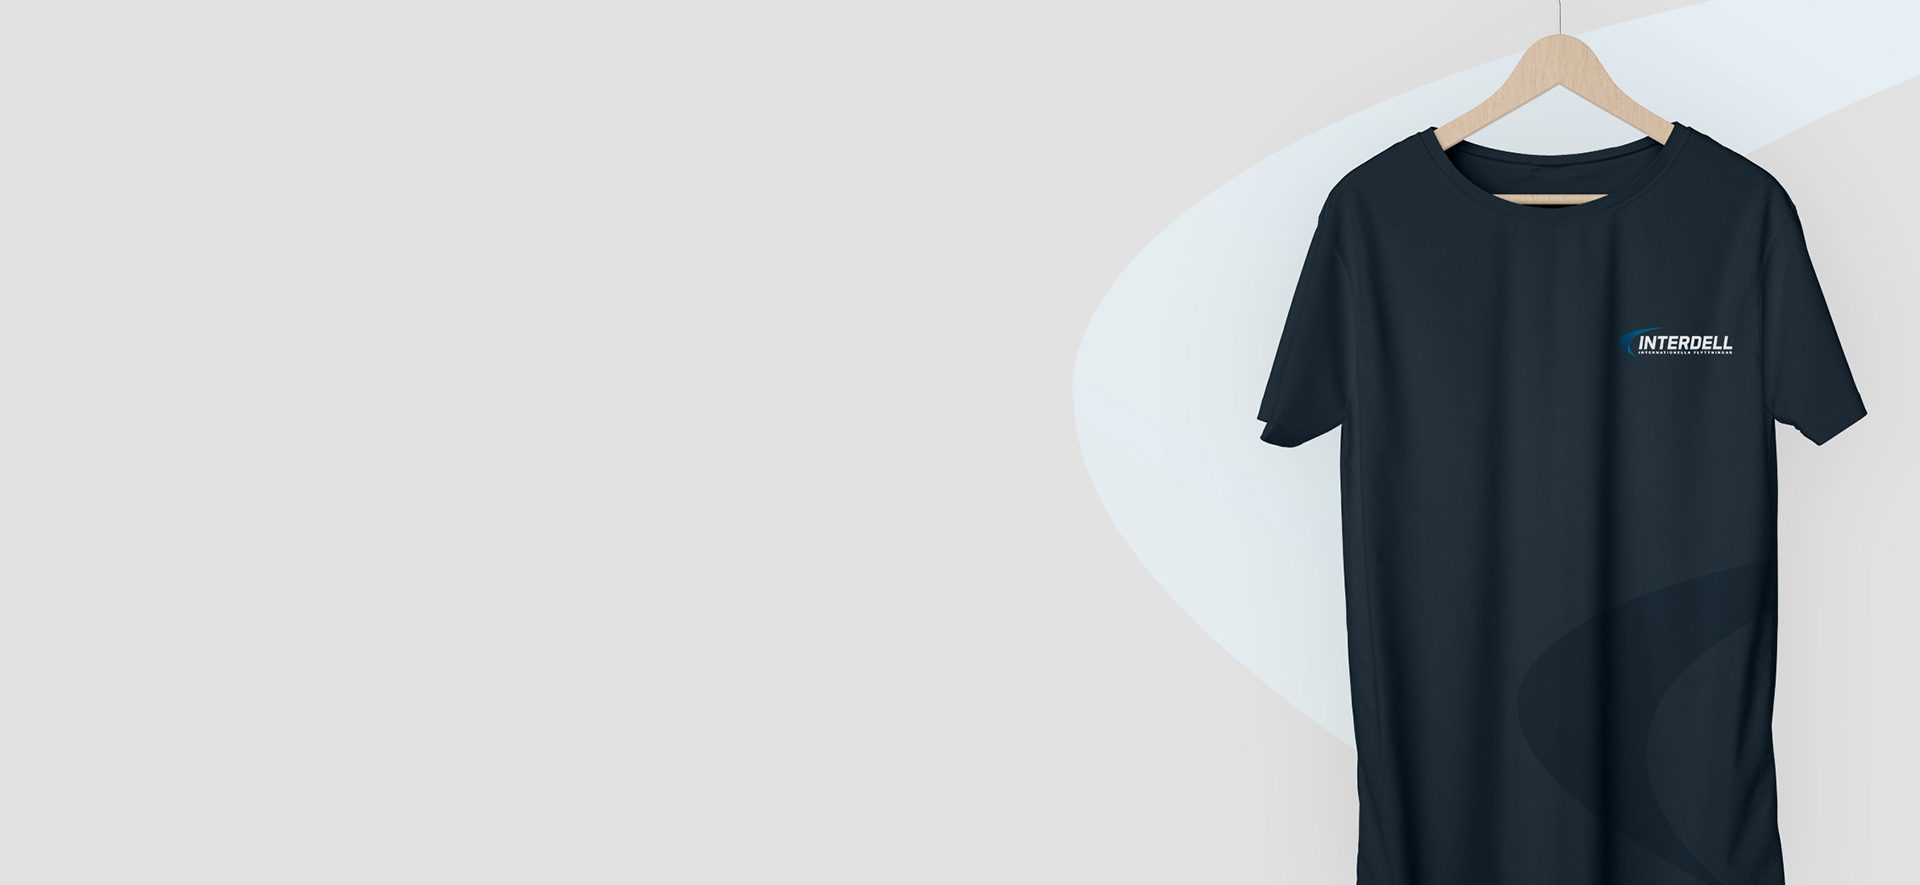 T-shirt Design-Klader-tshirts-logga-tryck